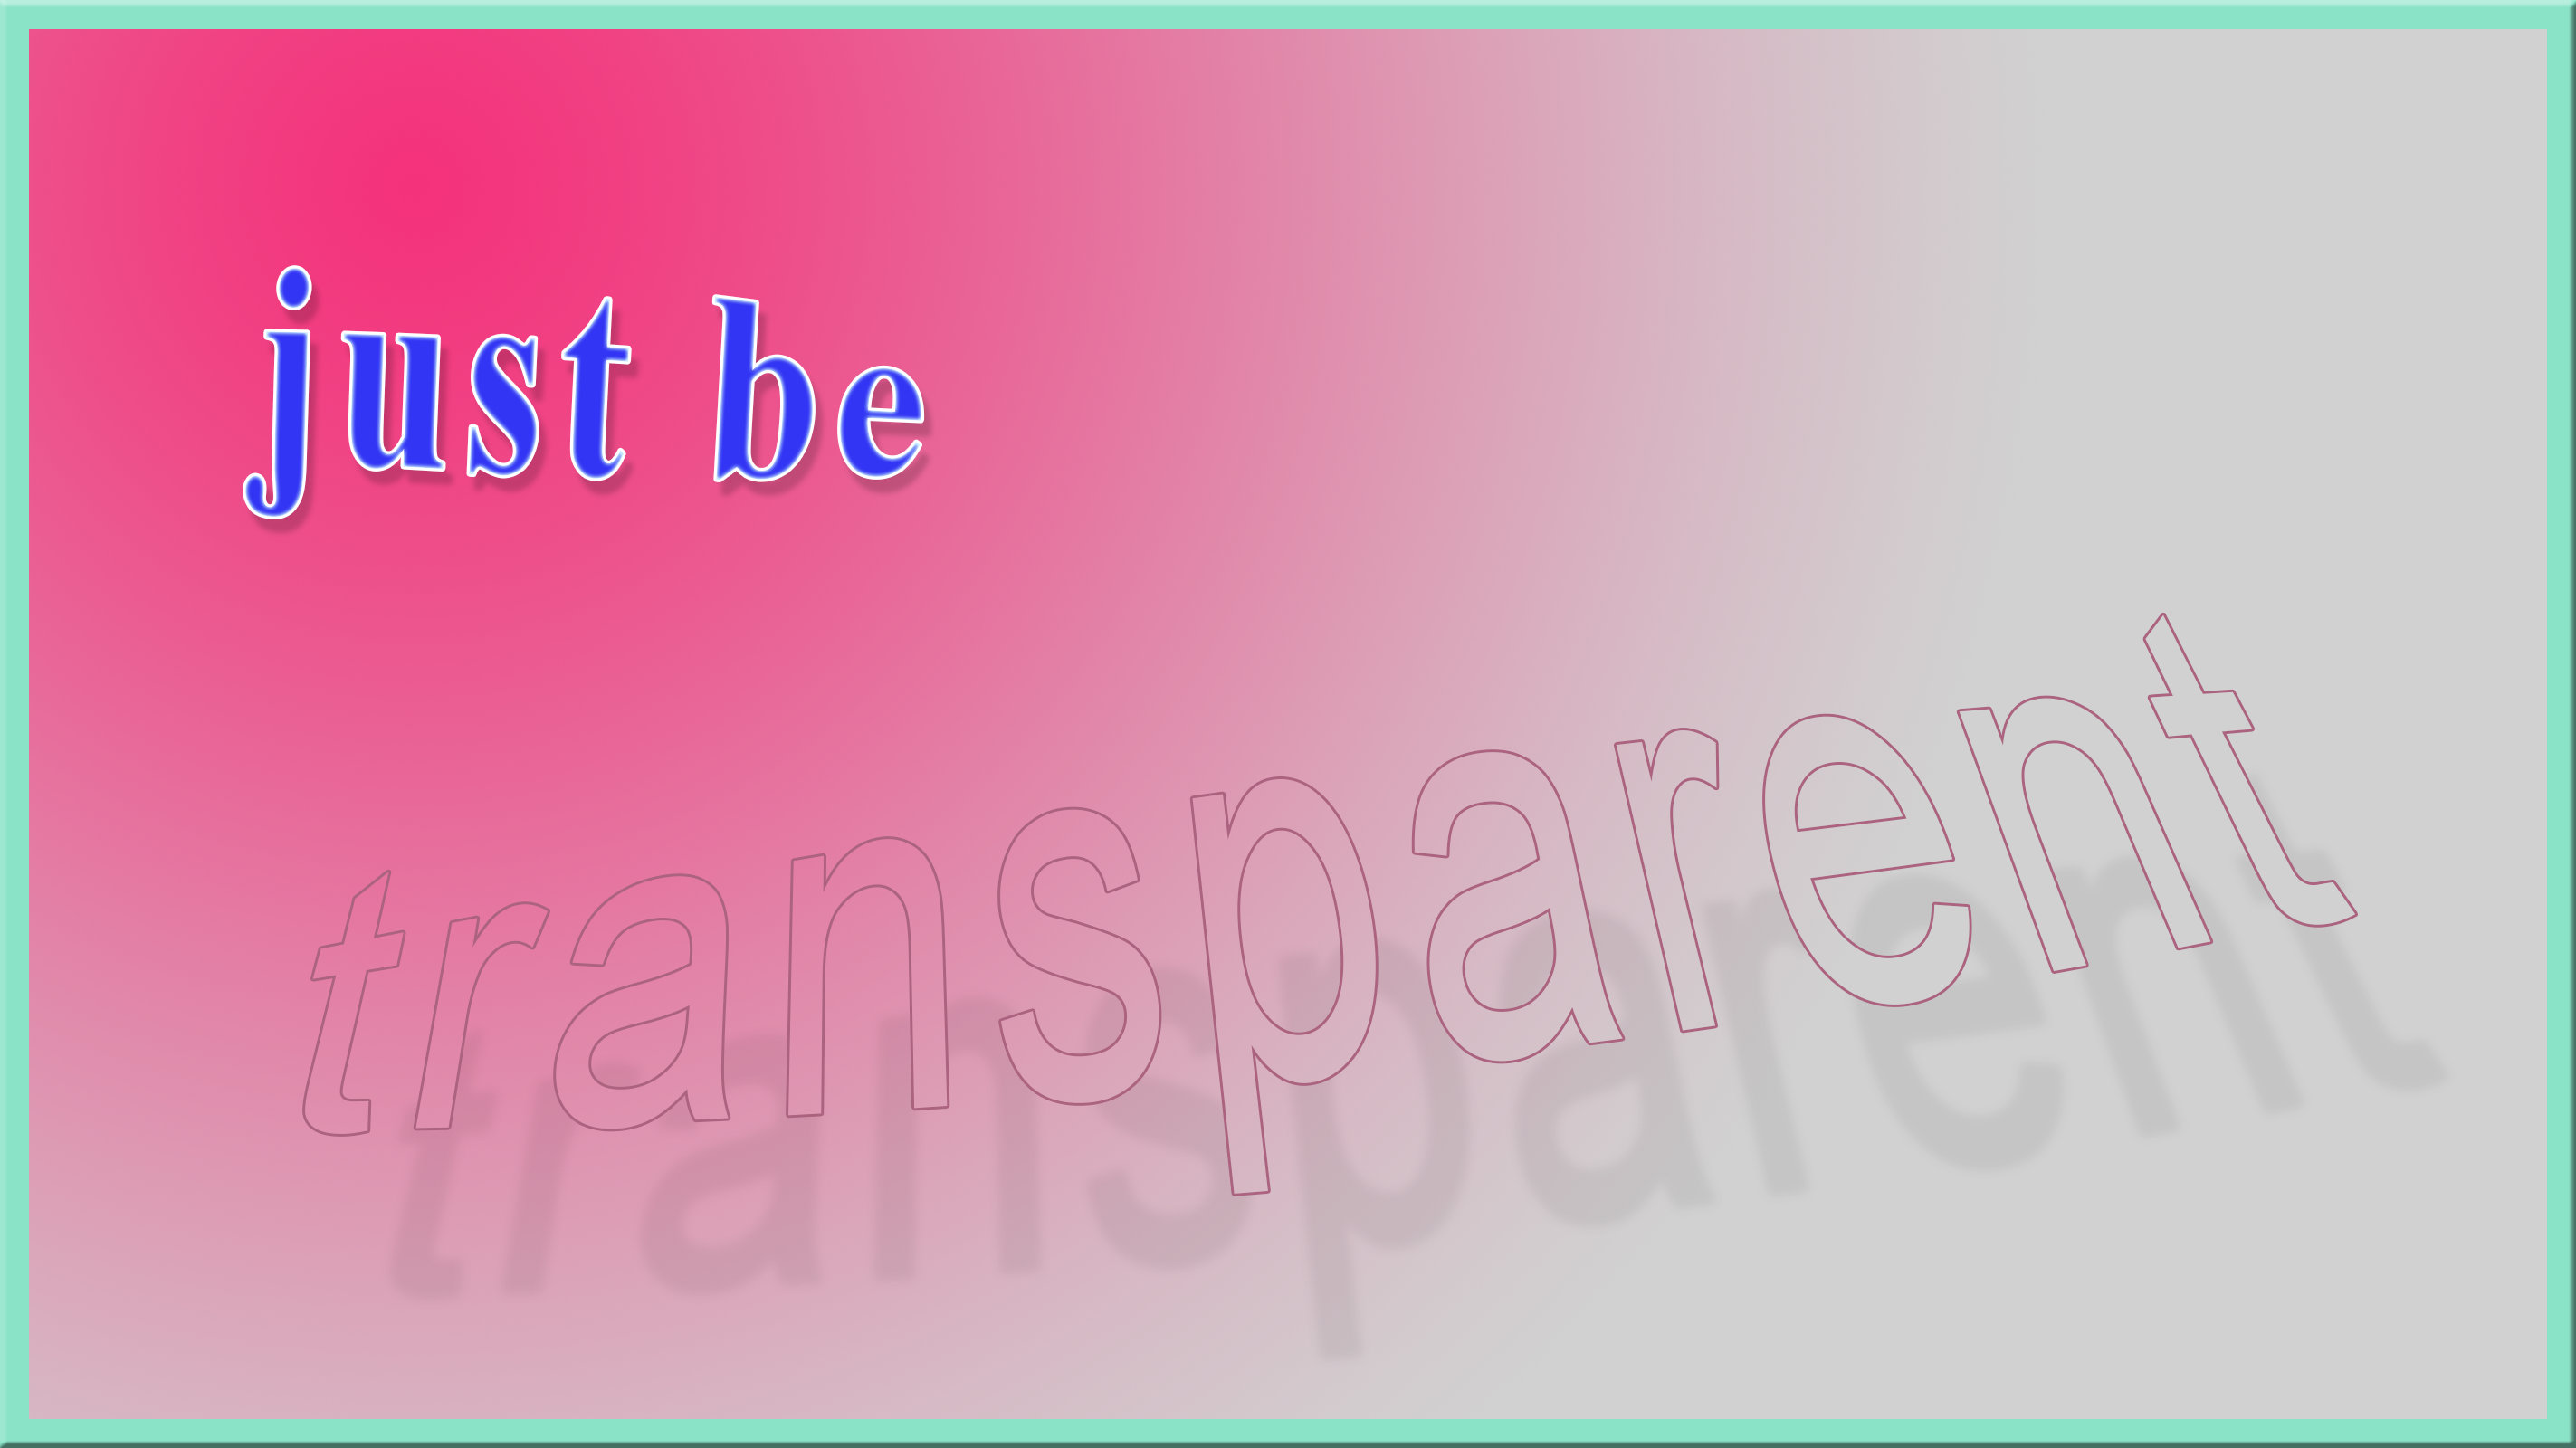 "be transparent"